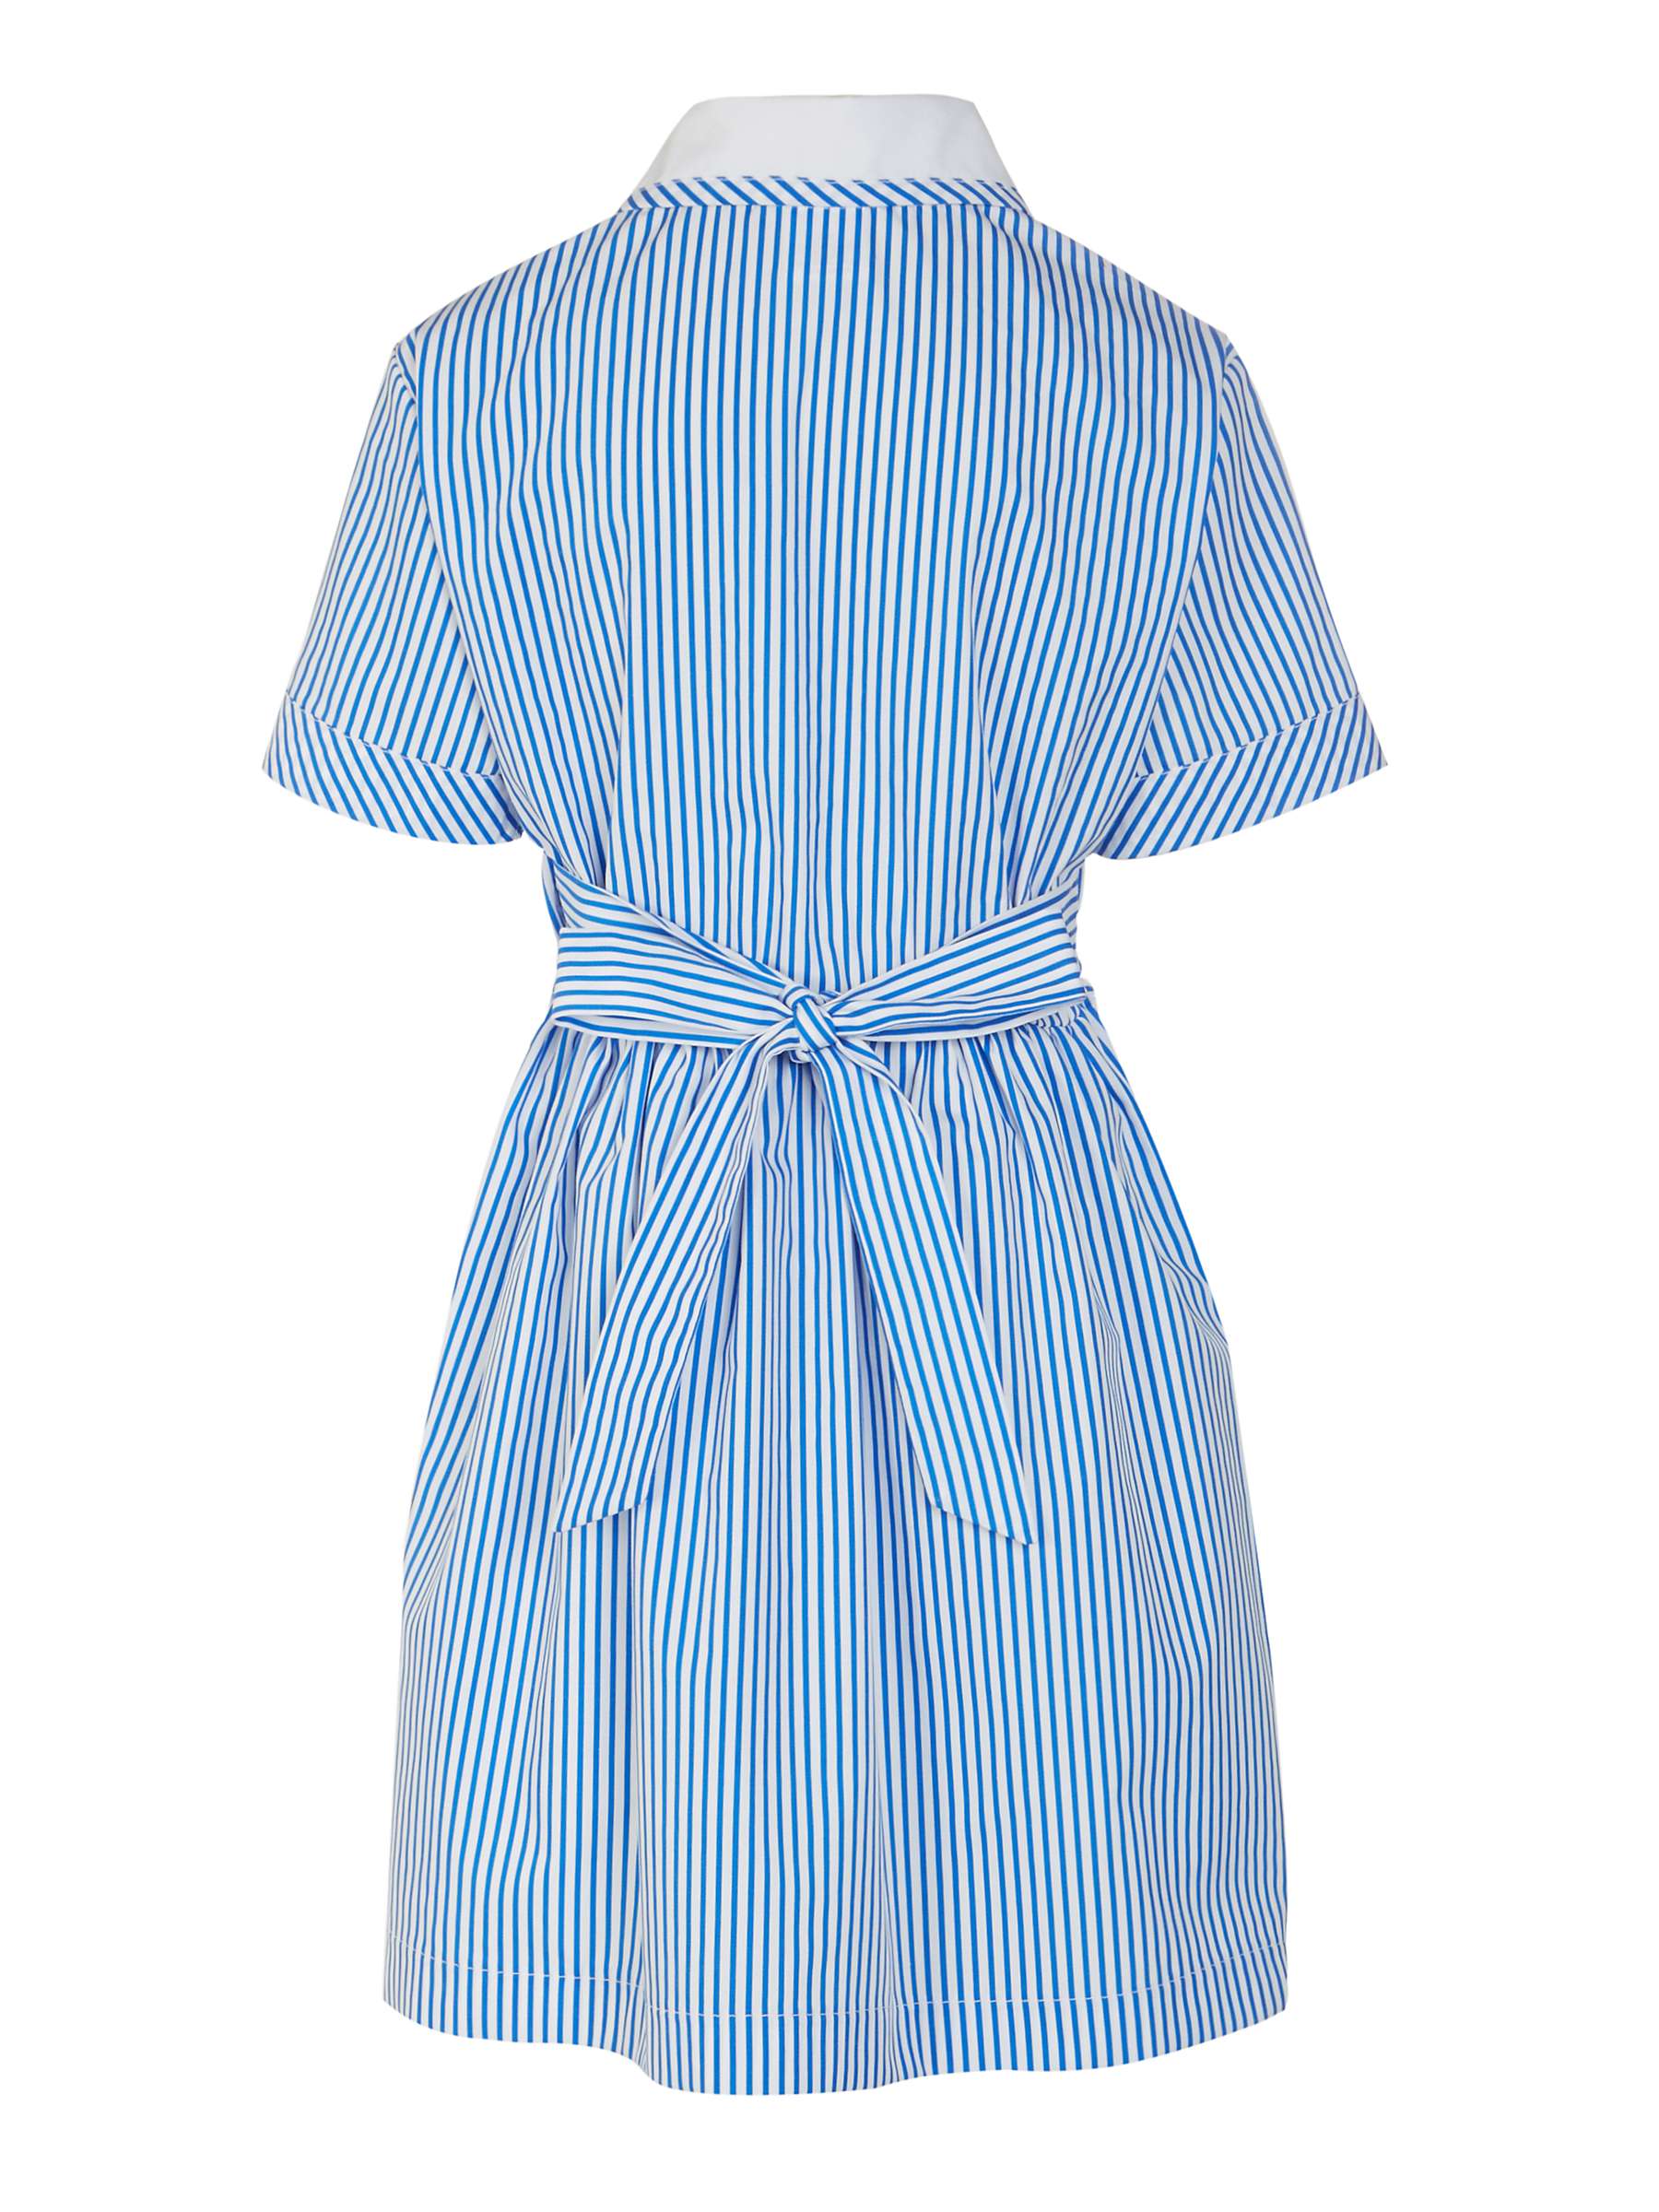 Buy Cameron Vale School Girls' Summer Dress, Blue/White Online at johnlewis.com